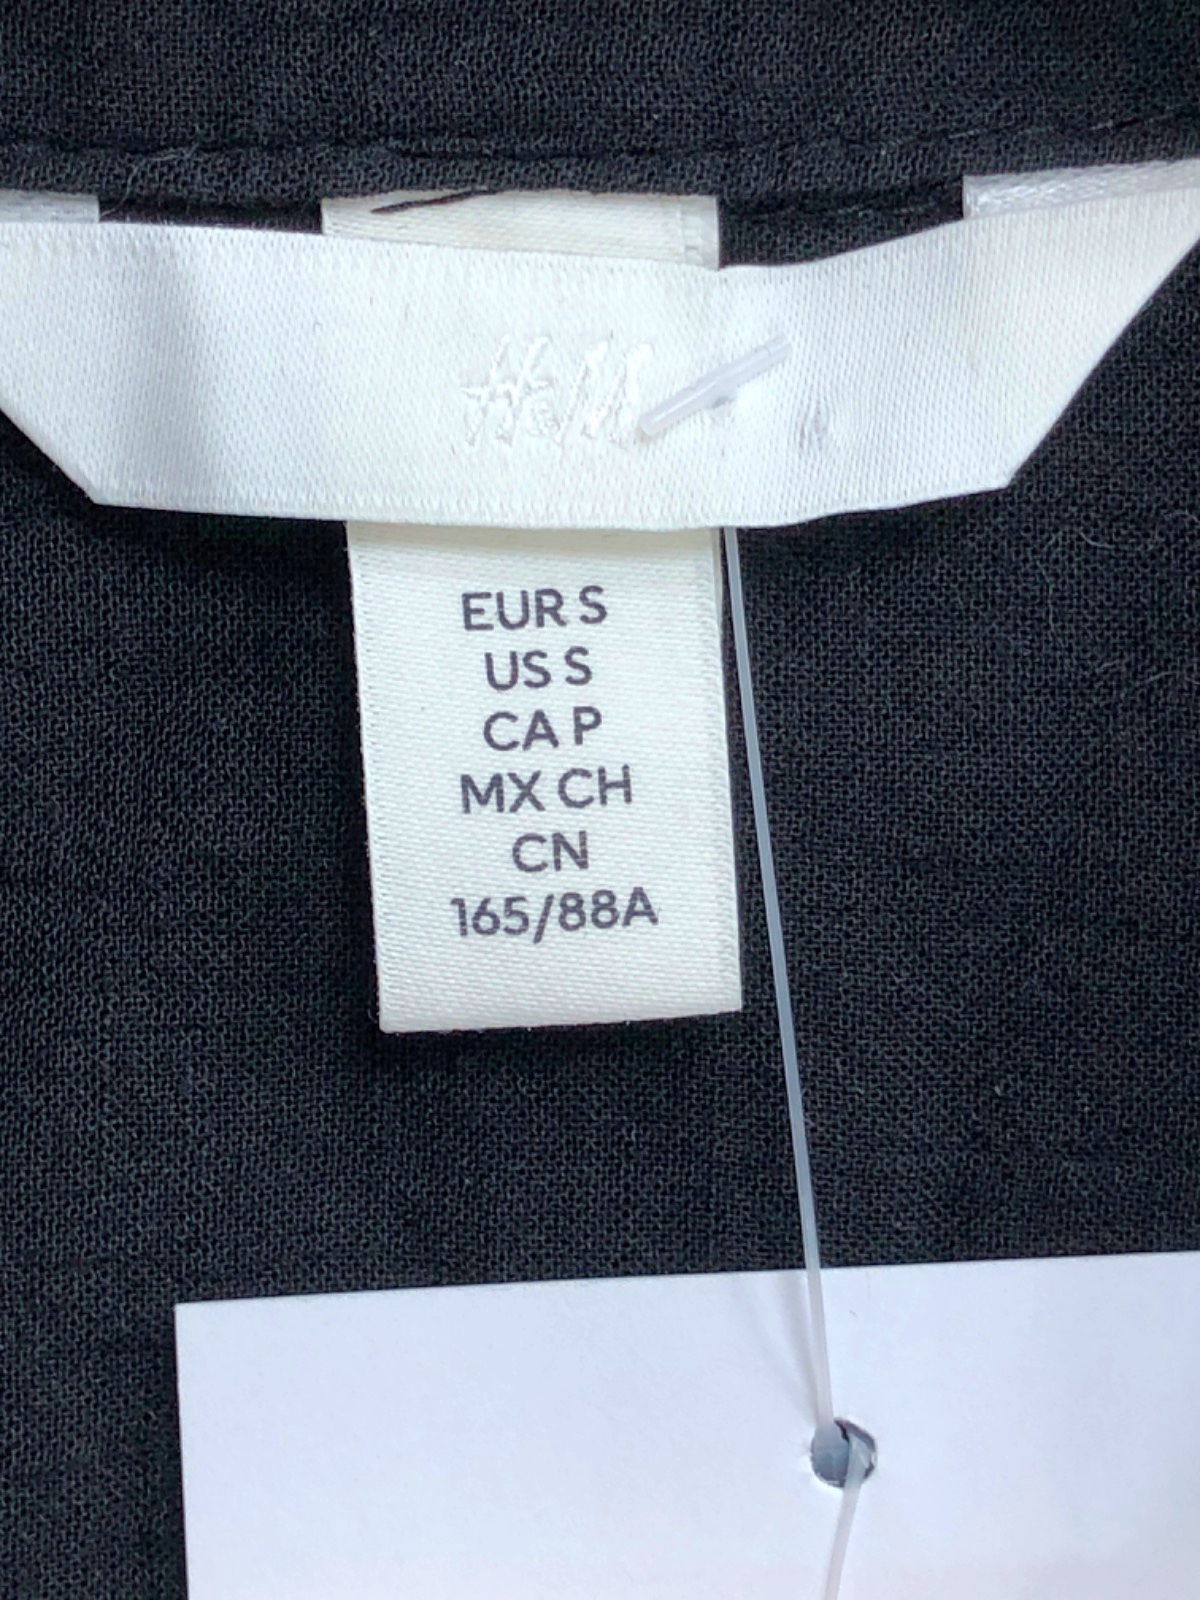 H&M Black Long-Sleeve Shirt S